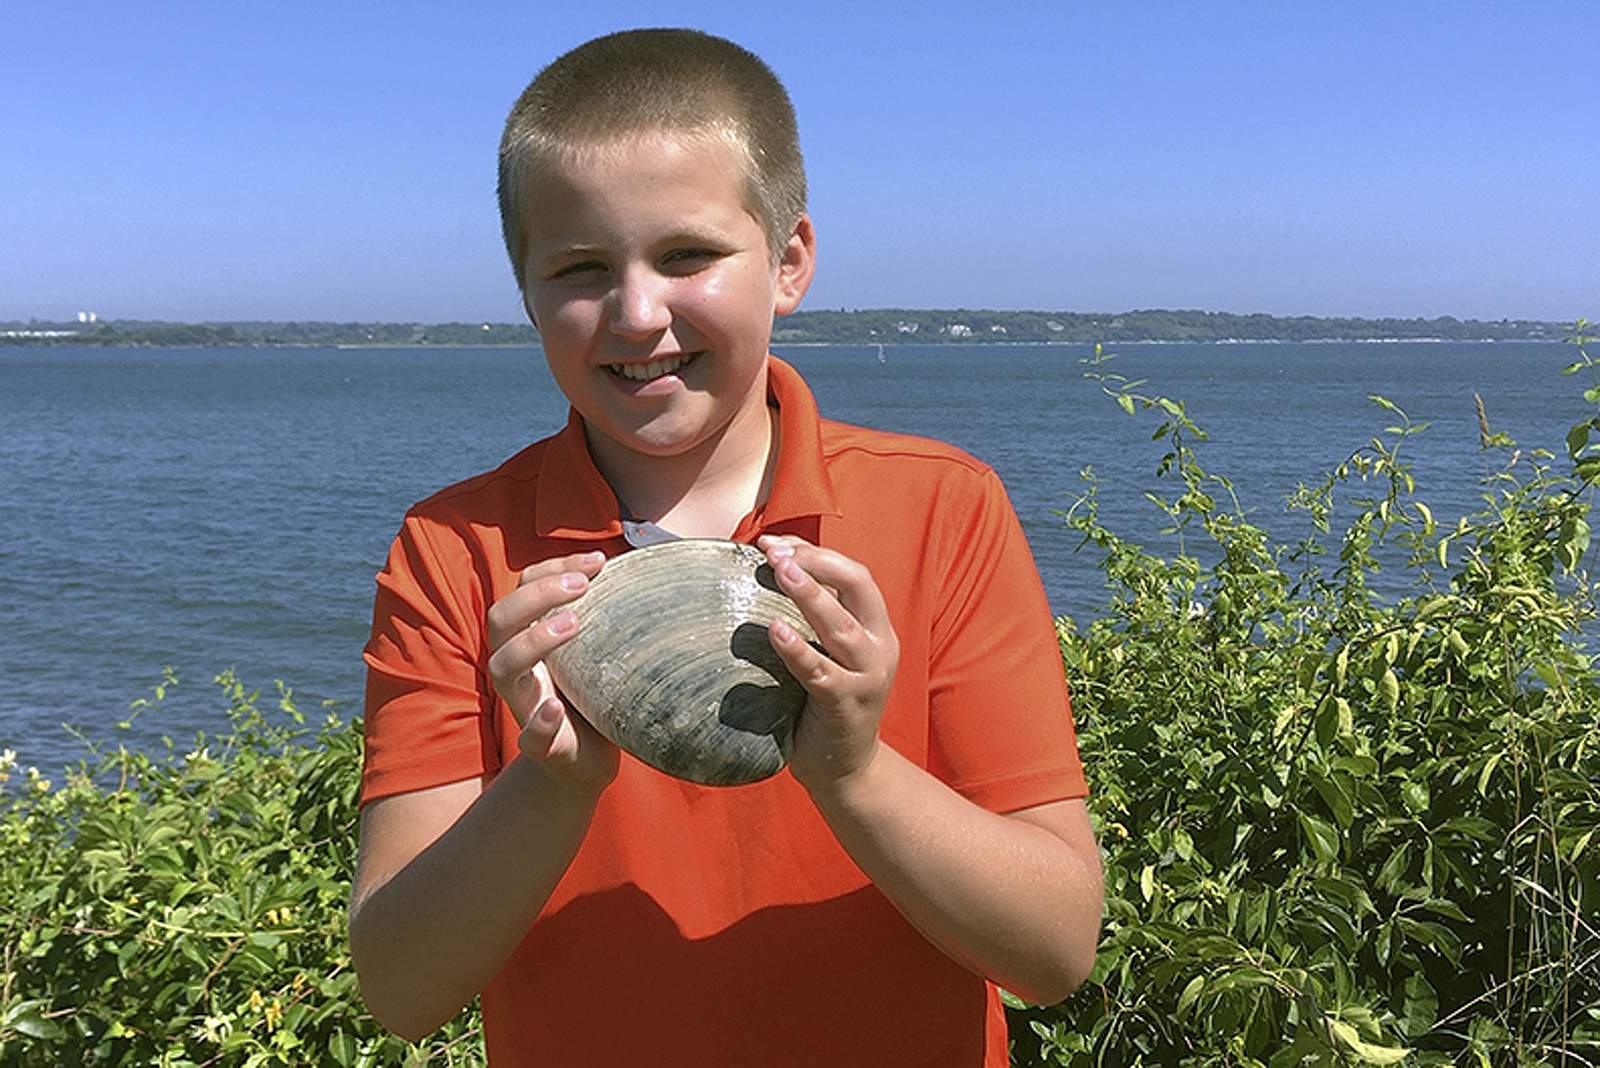 Rhode Island boy digs up massive 2 1/2-pound mollusk